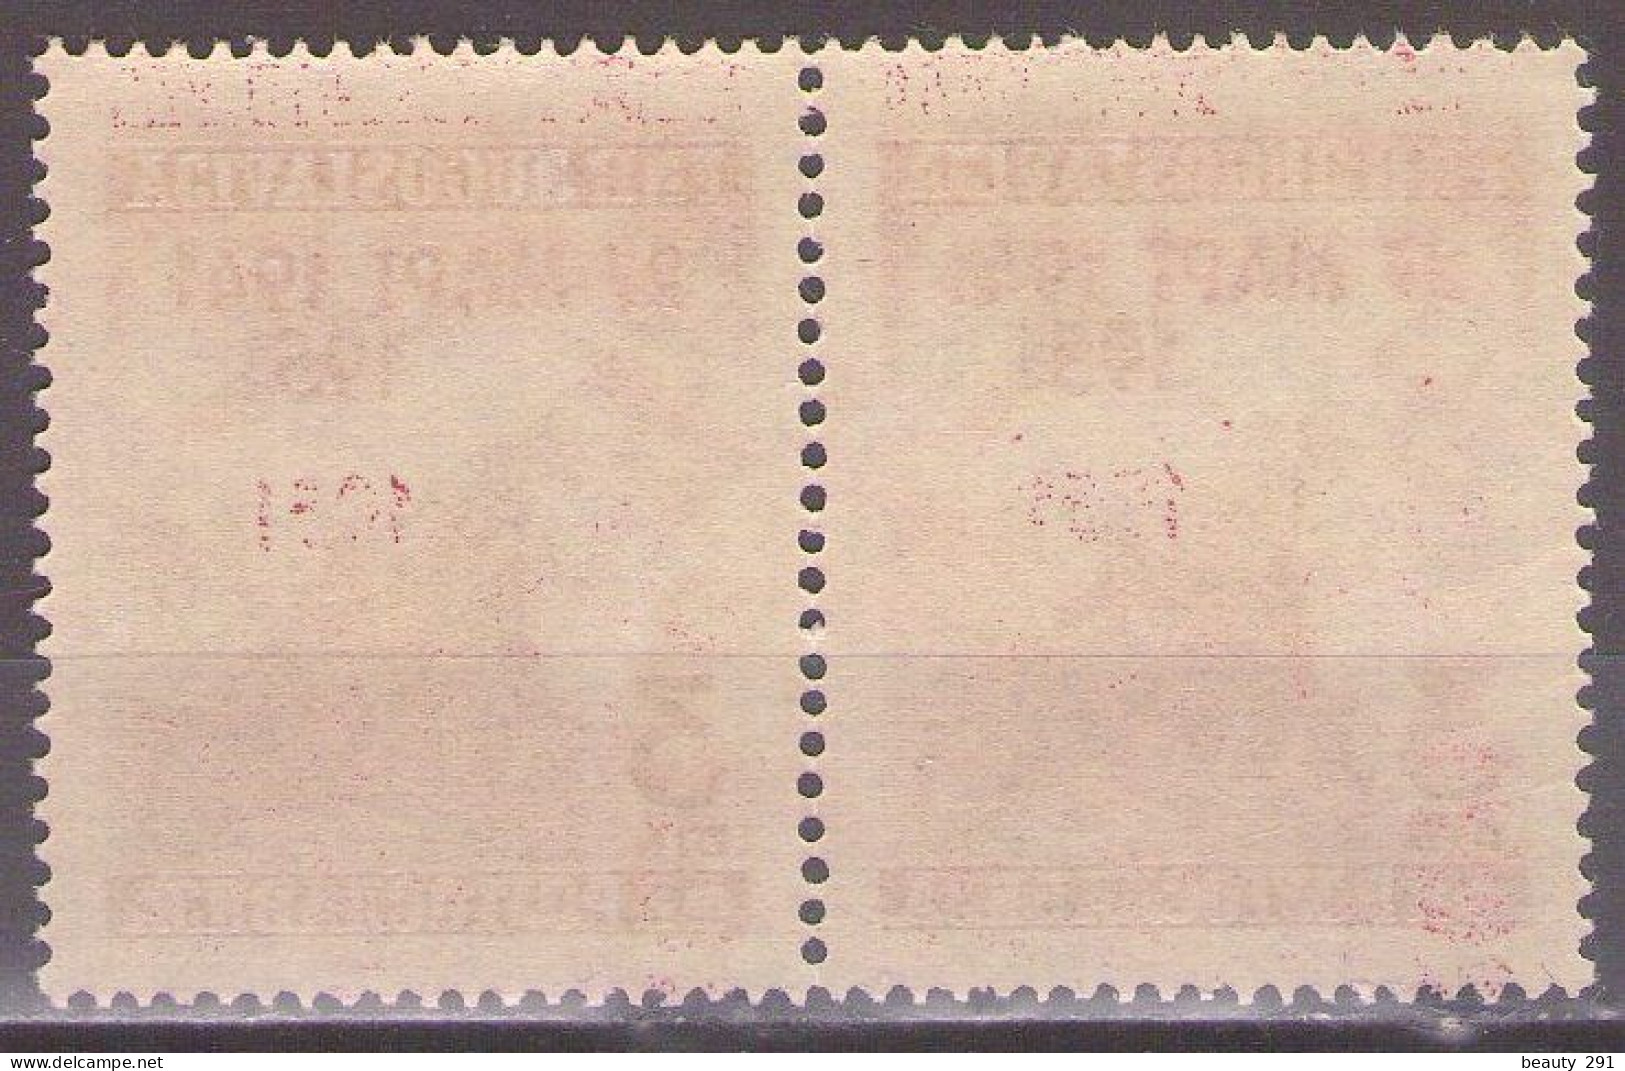 Yugoslavia 1951 - National Uprising - Mi 640 - MNH**VF - Unused Stamps